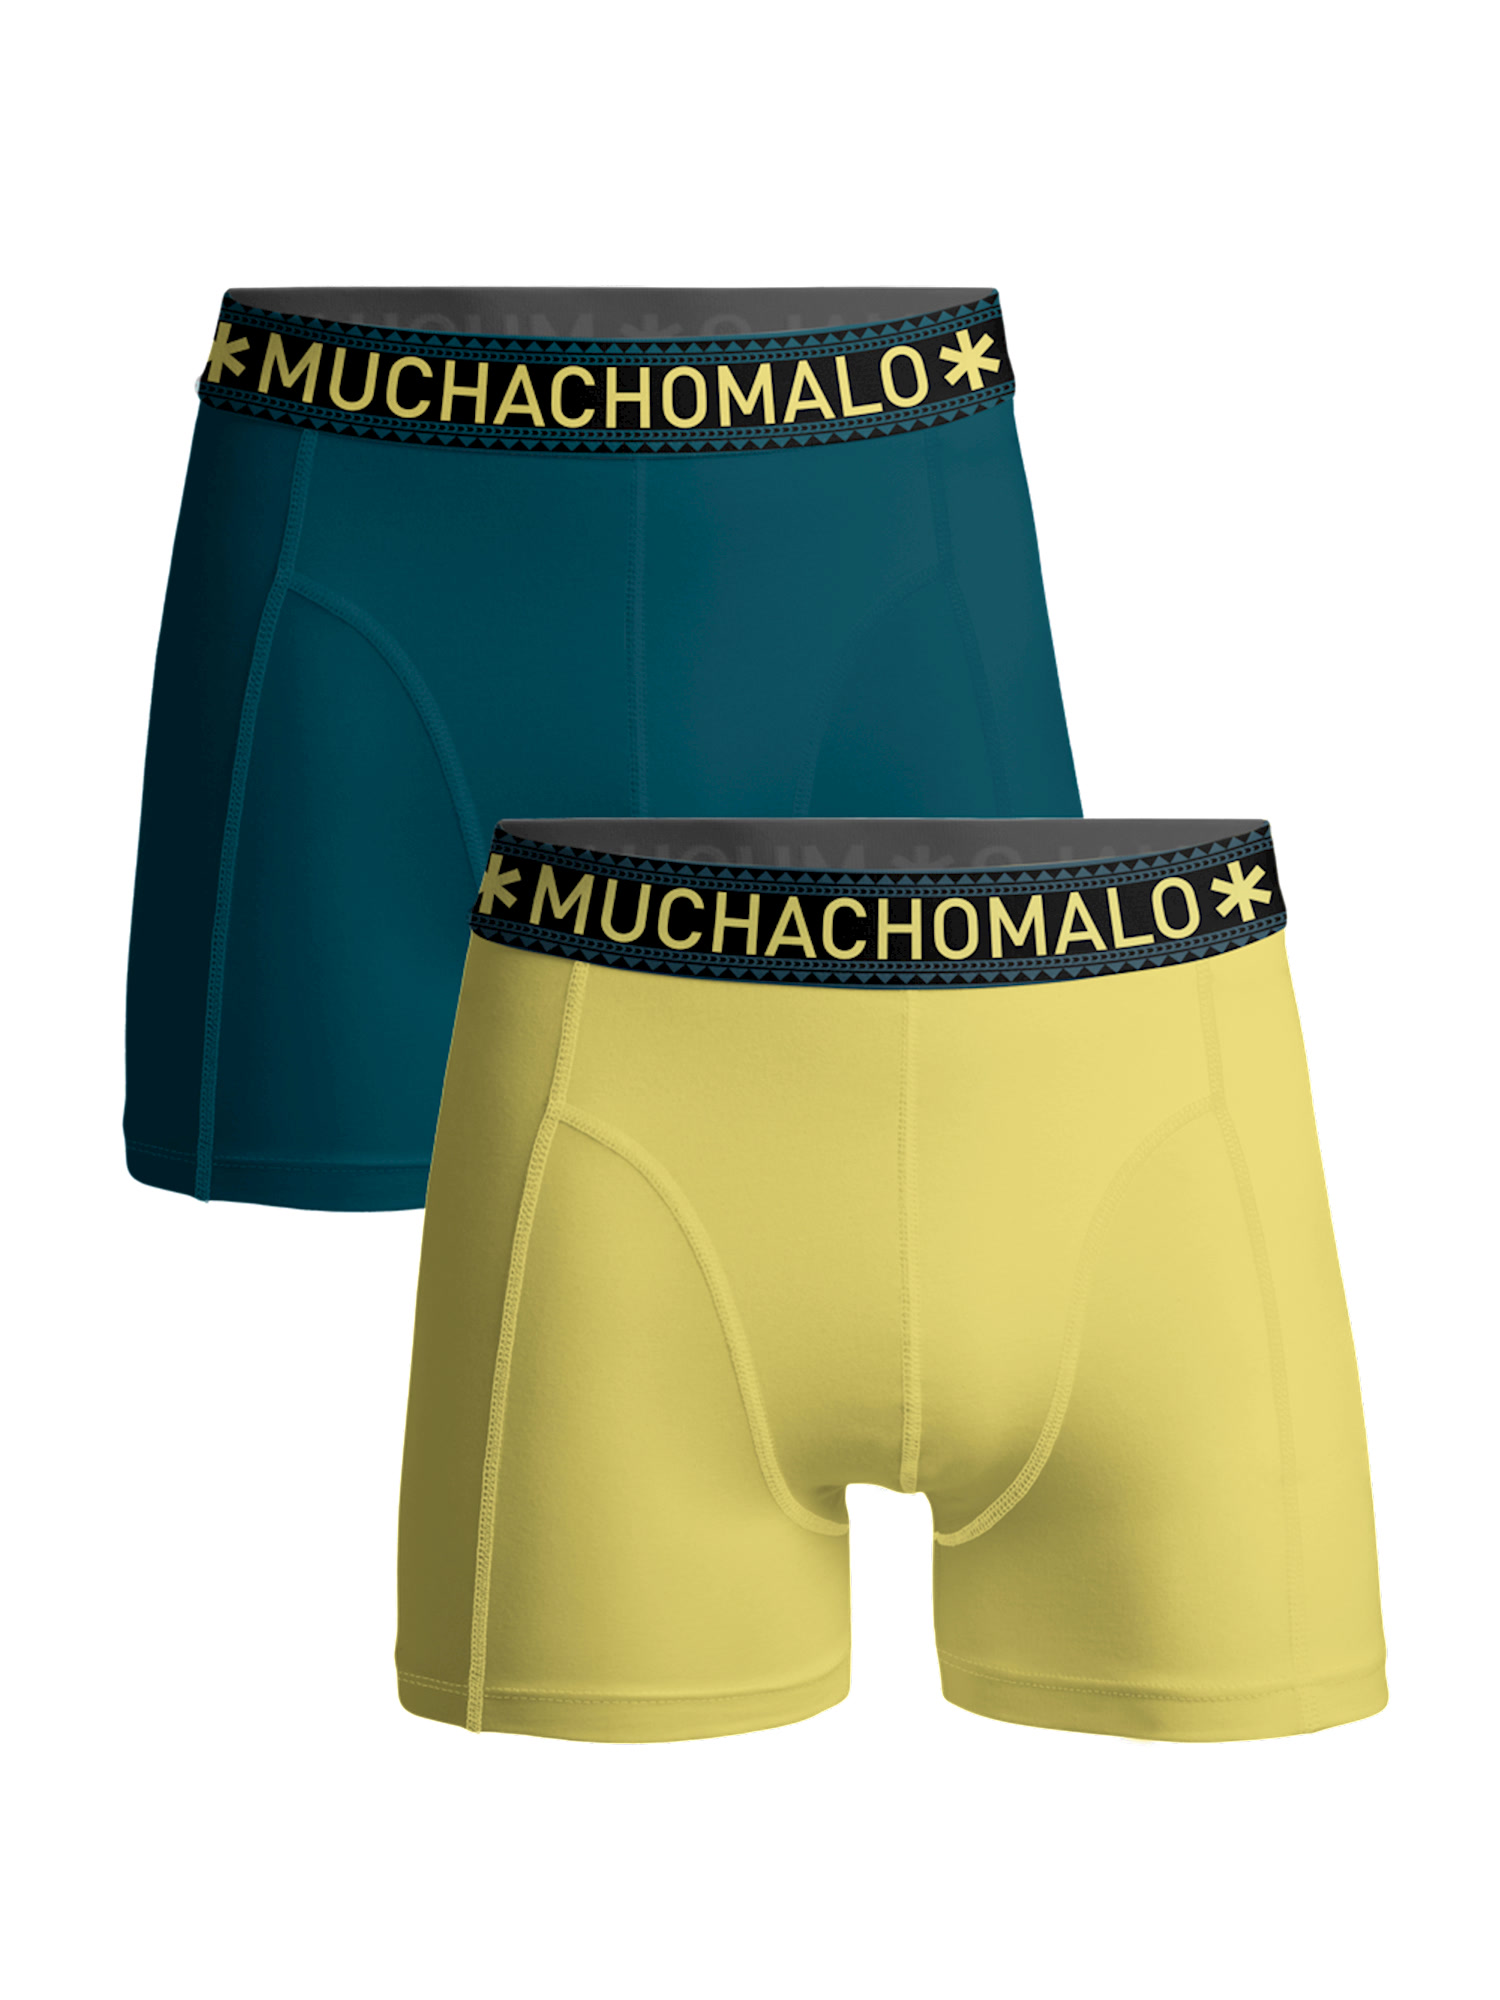 Боксеры Muchachomalo 2er-Set: Boxershorts, цвет Yellow/Blue боксеры muchachomalo 2er set boxershorts цвет black black blue blue